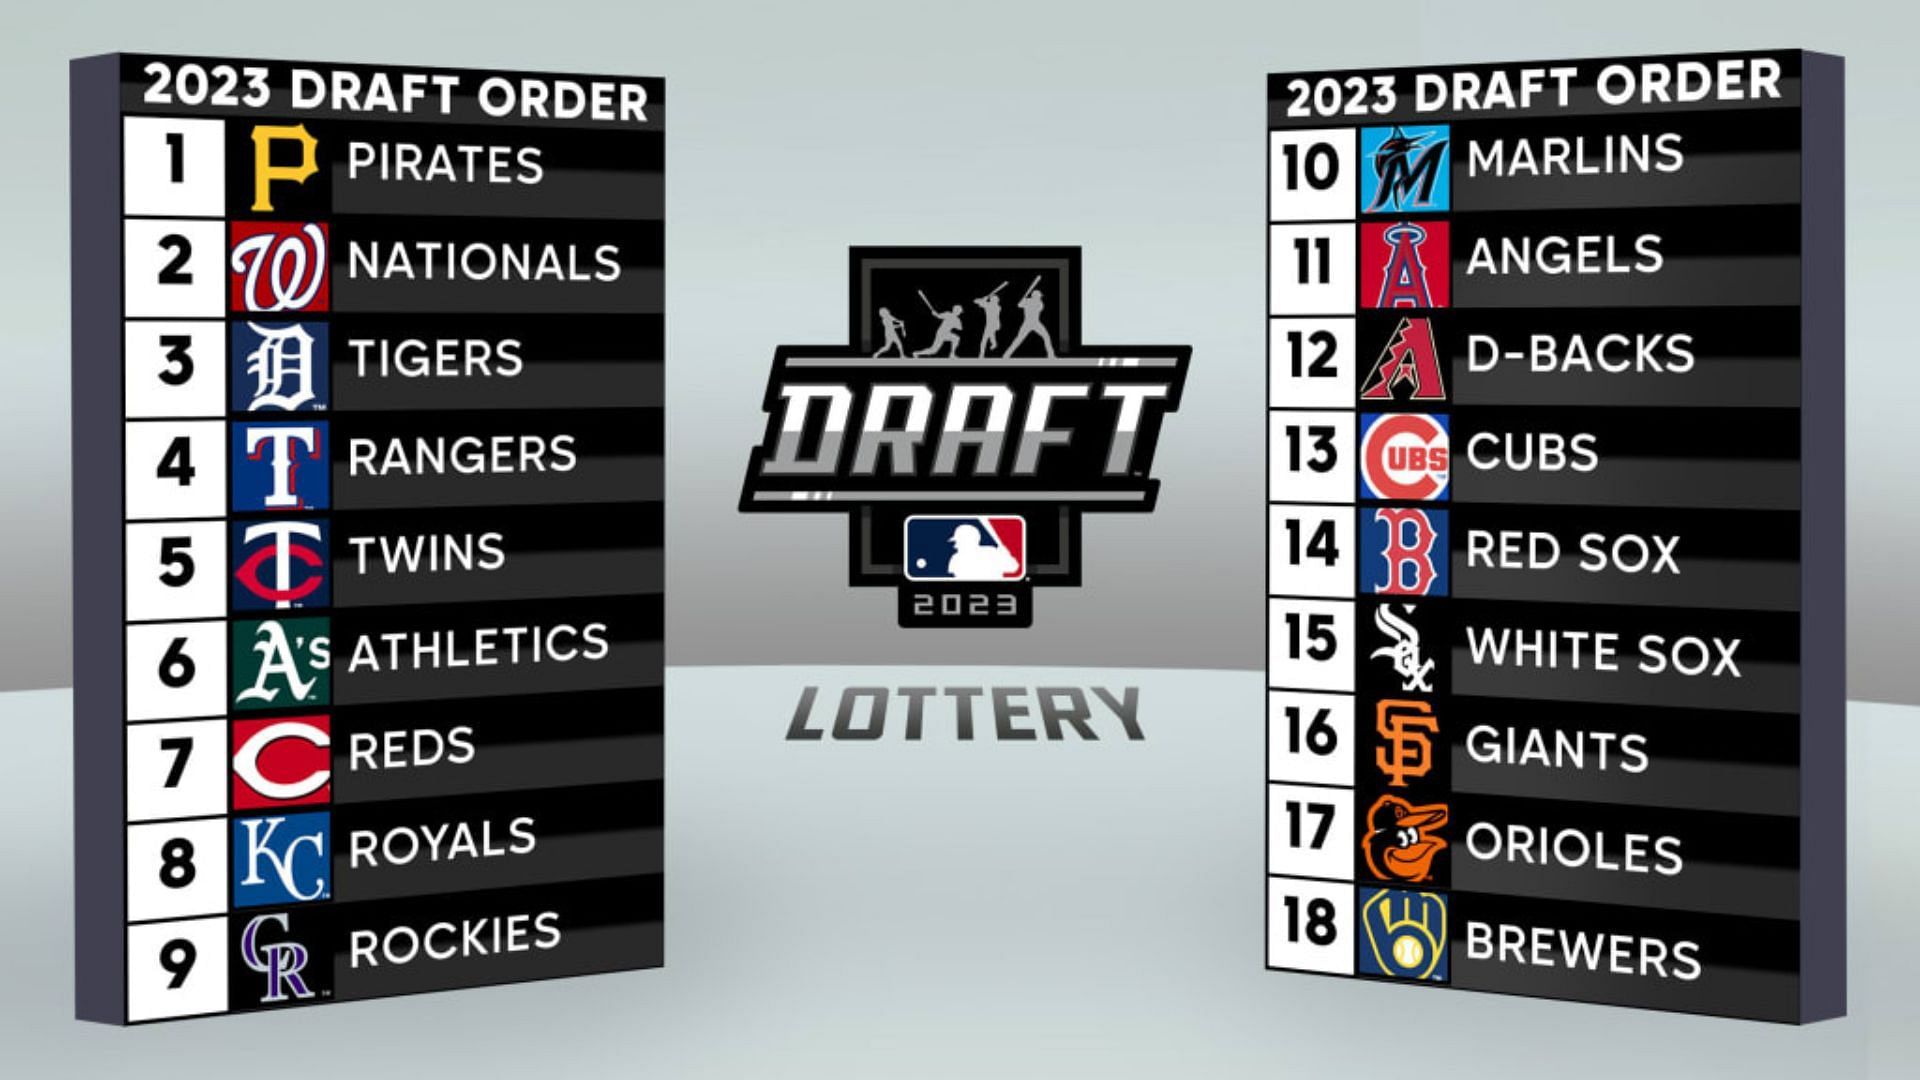 Teams for the MLB Draft